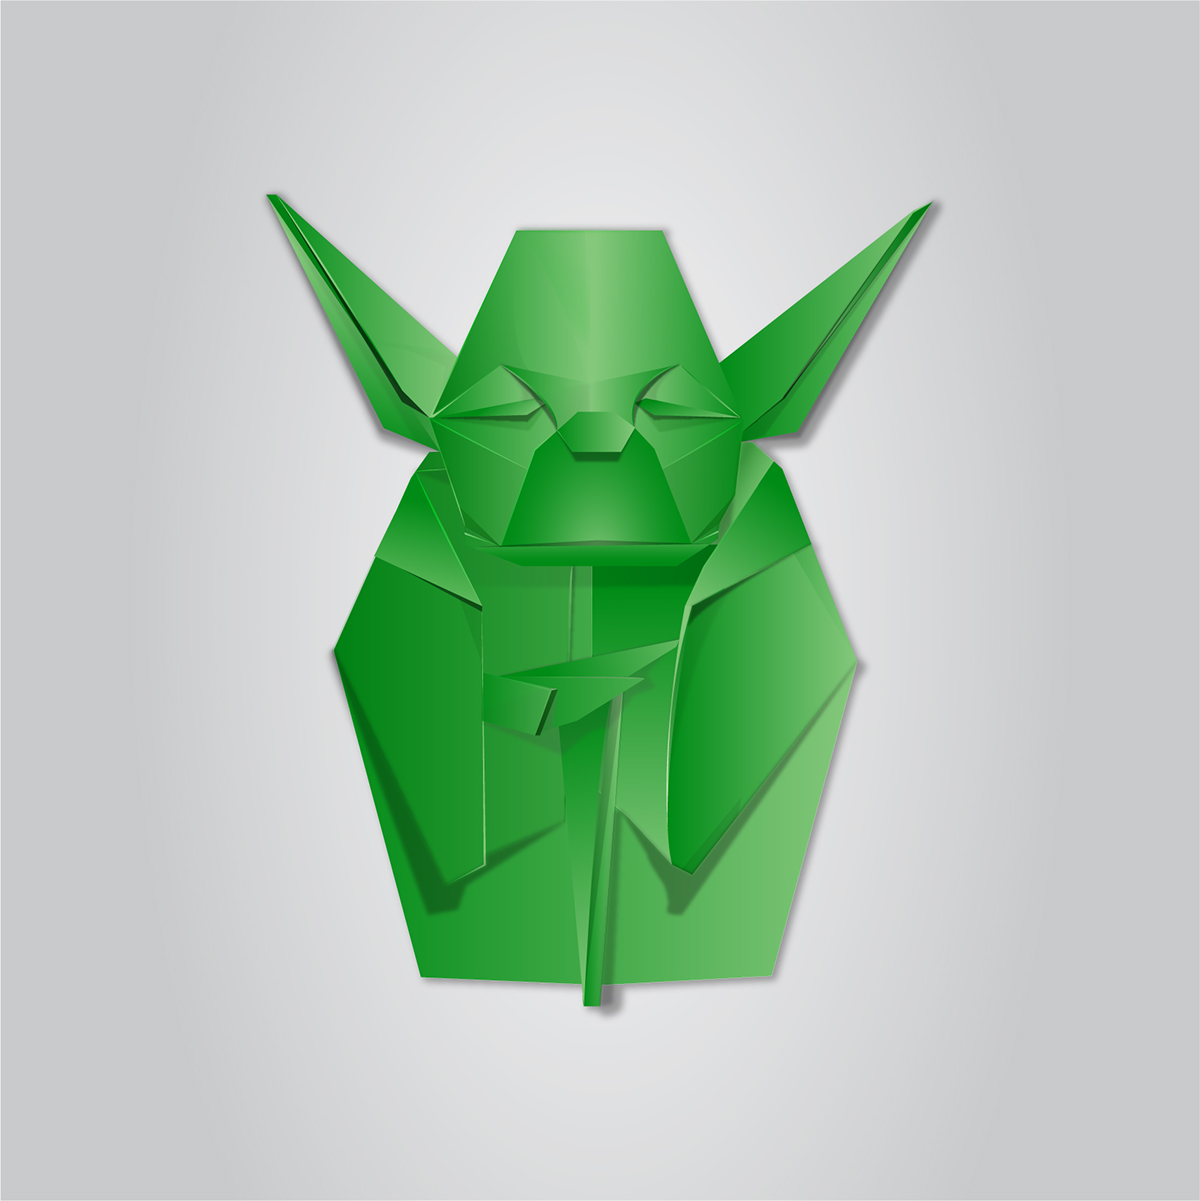 ironman mask yoda Starwars butterfly crane folding paper batman darknight Gundam robots